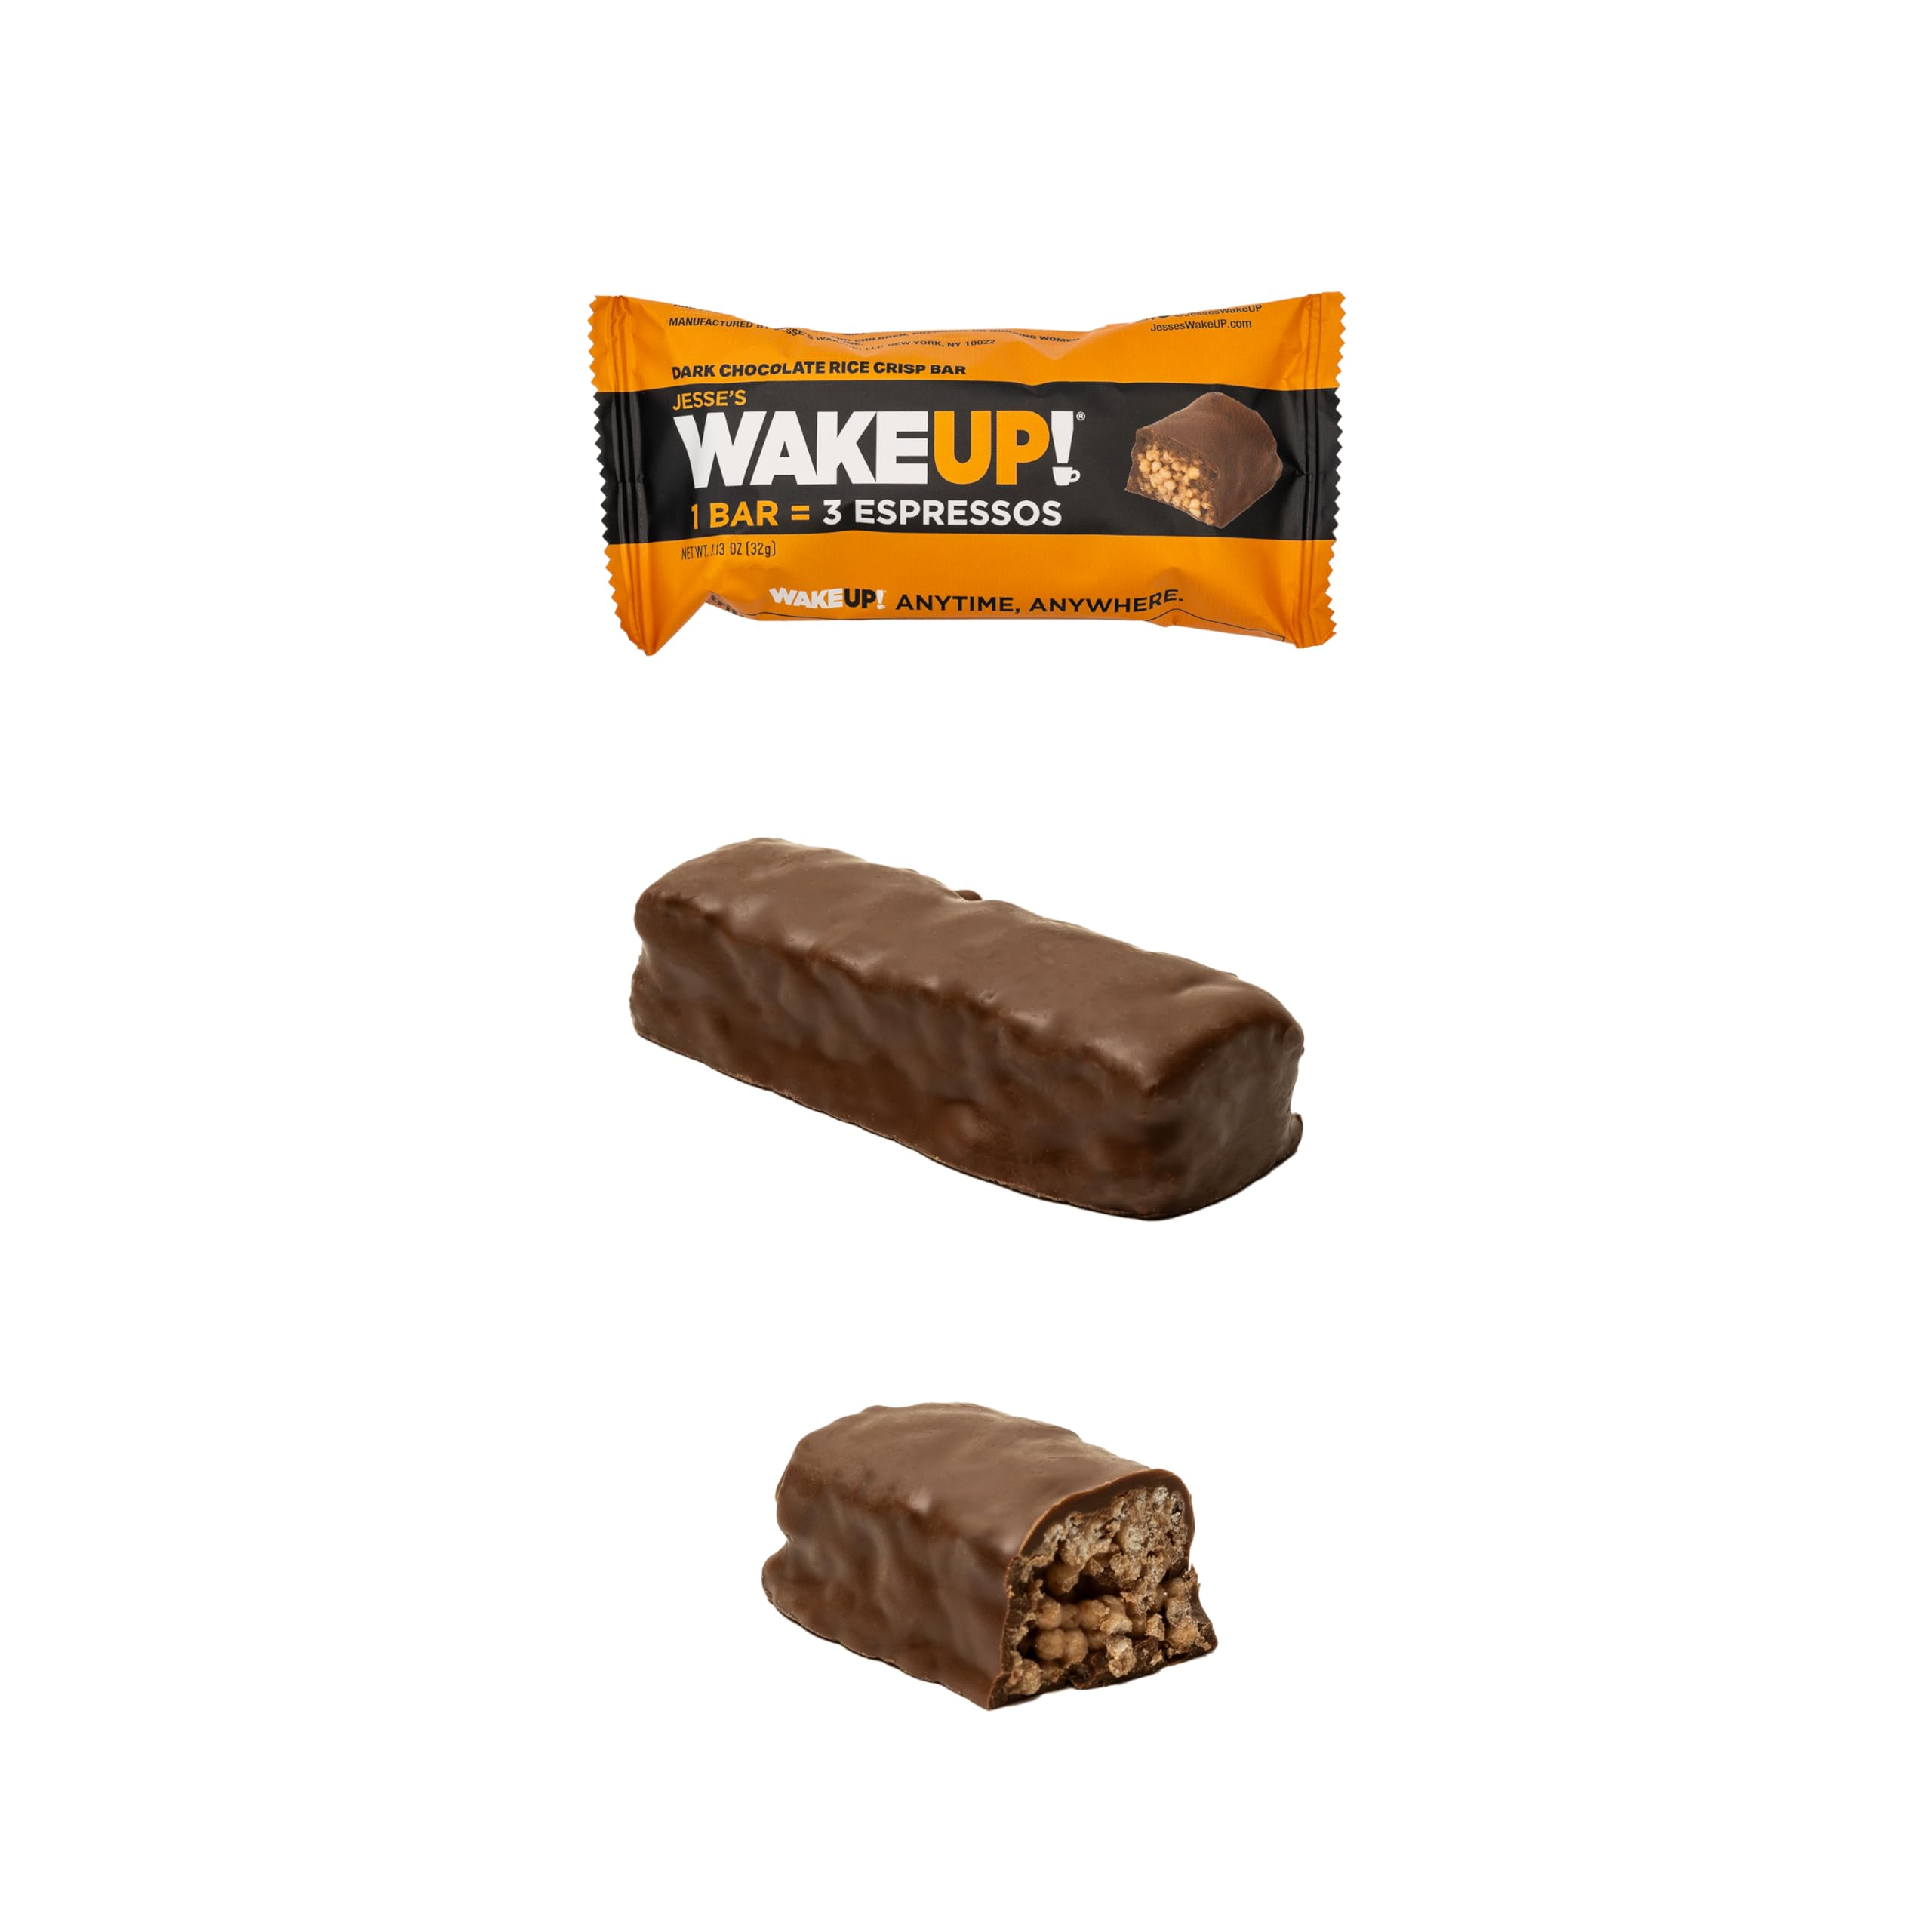 WAKE UP! Caffeinated Chocolate Protein Bars Gluten Free, Vegan, 350mg of Caffeine Energy, Kosher to help Boost Focus and Clarity (1 Bar = 3 Espressos) 6 Pack